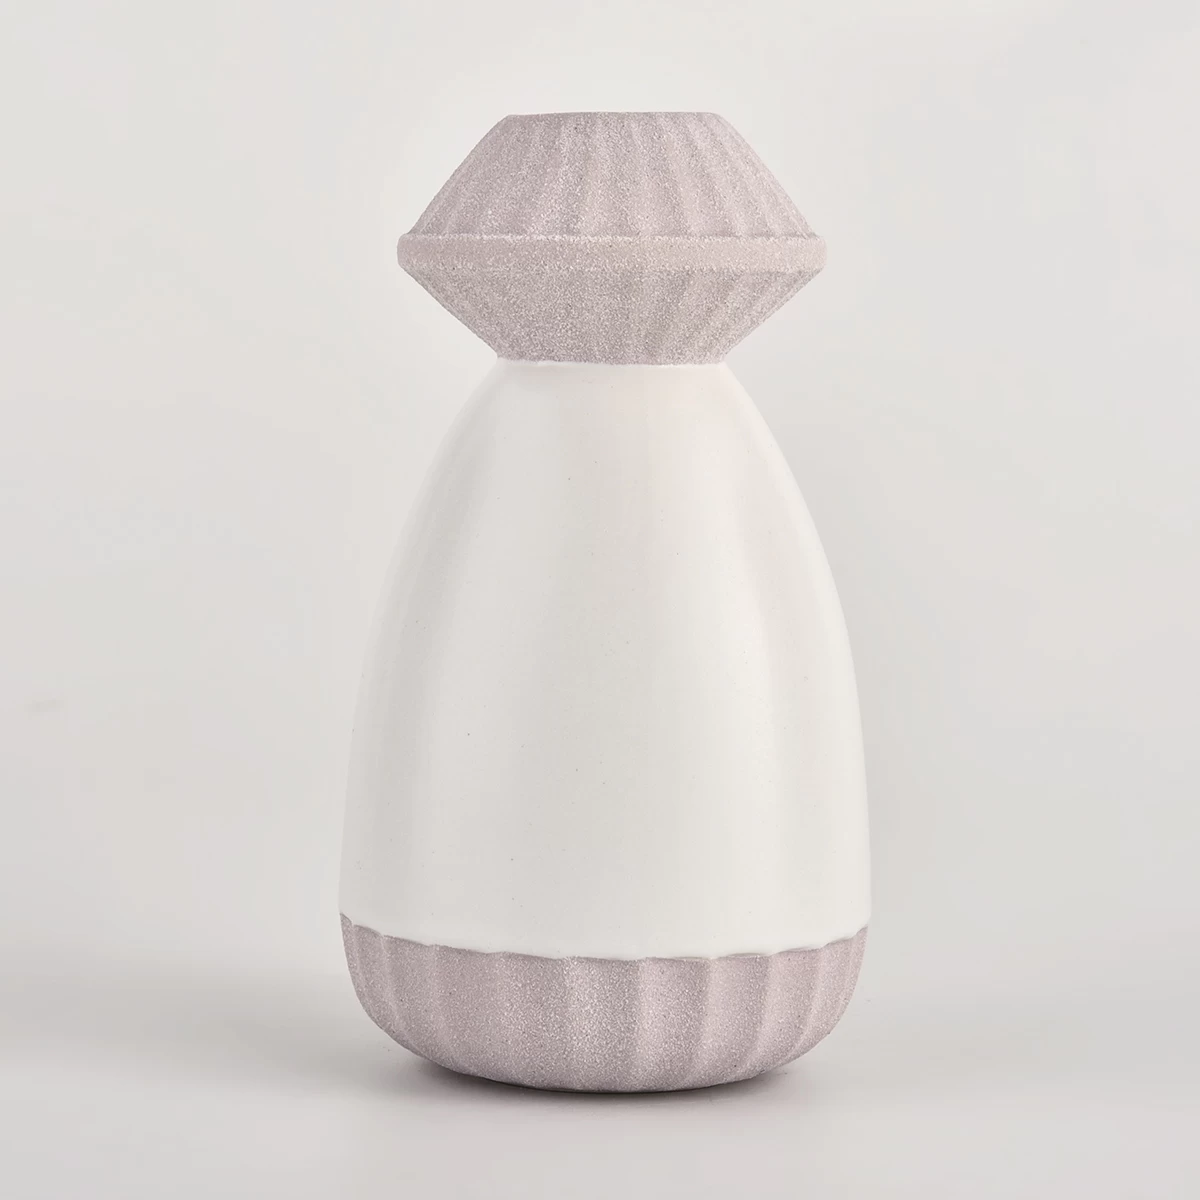 luxury aromatic ceramic diffuser bottles for home